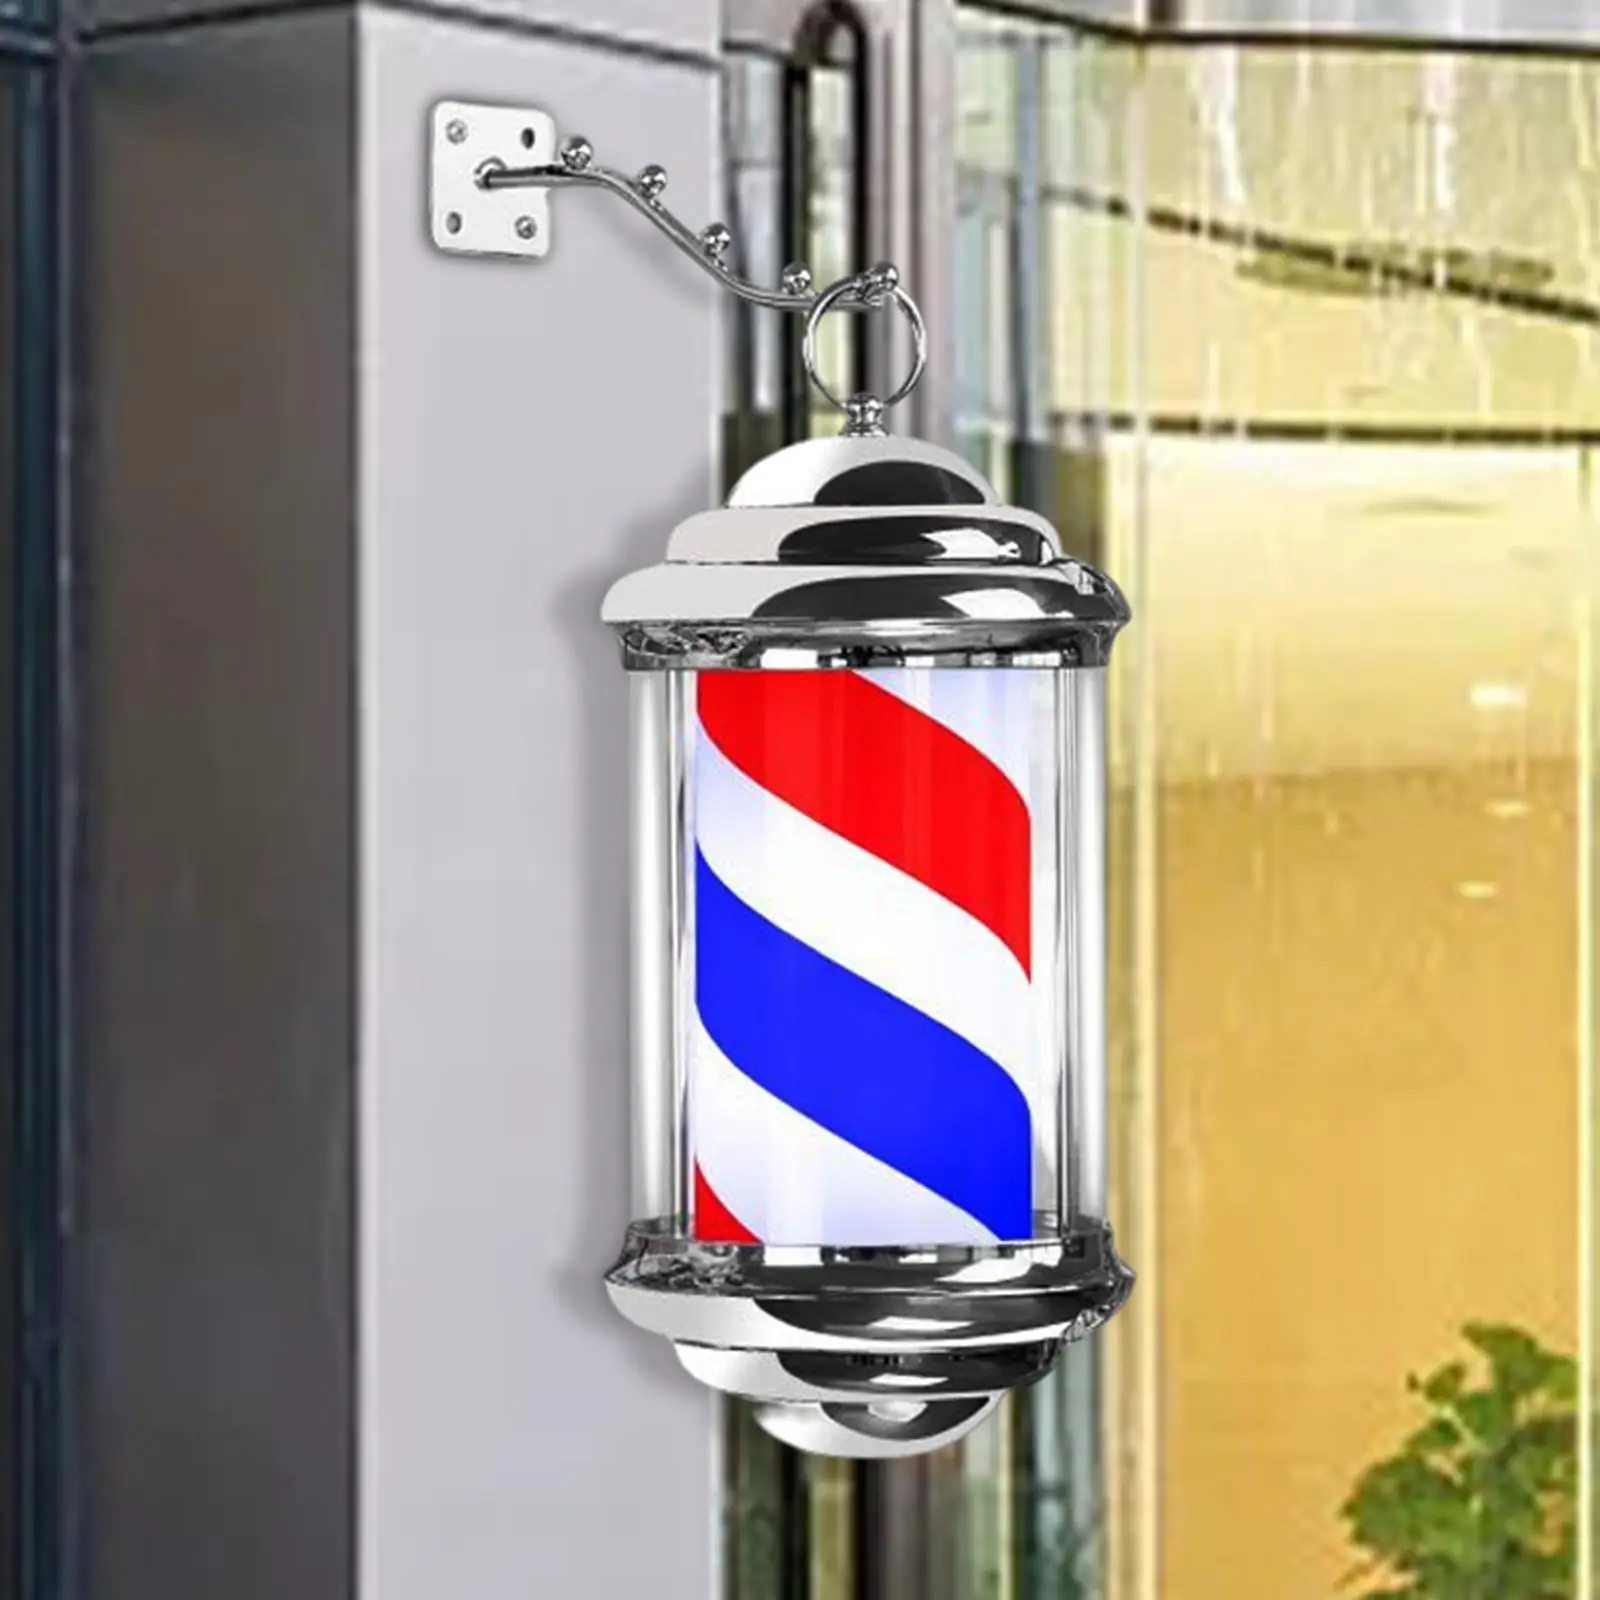 Barber Shop Pole Light Rotating Hair Salon Shop Sign Light Stripes Water Resistant Nightlight LED Lamp for Entrance